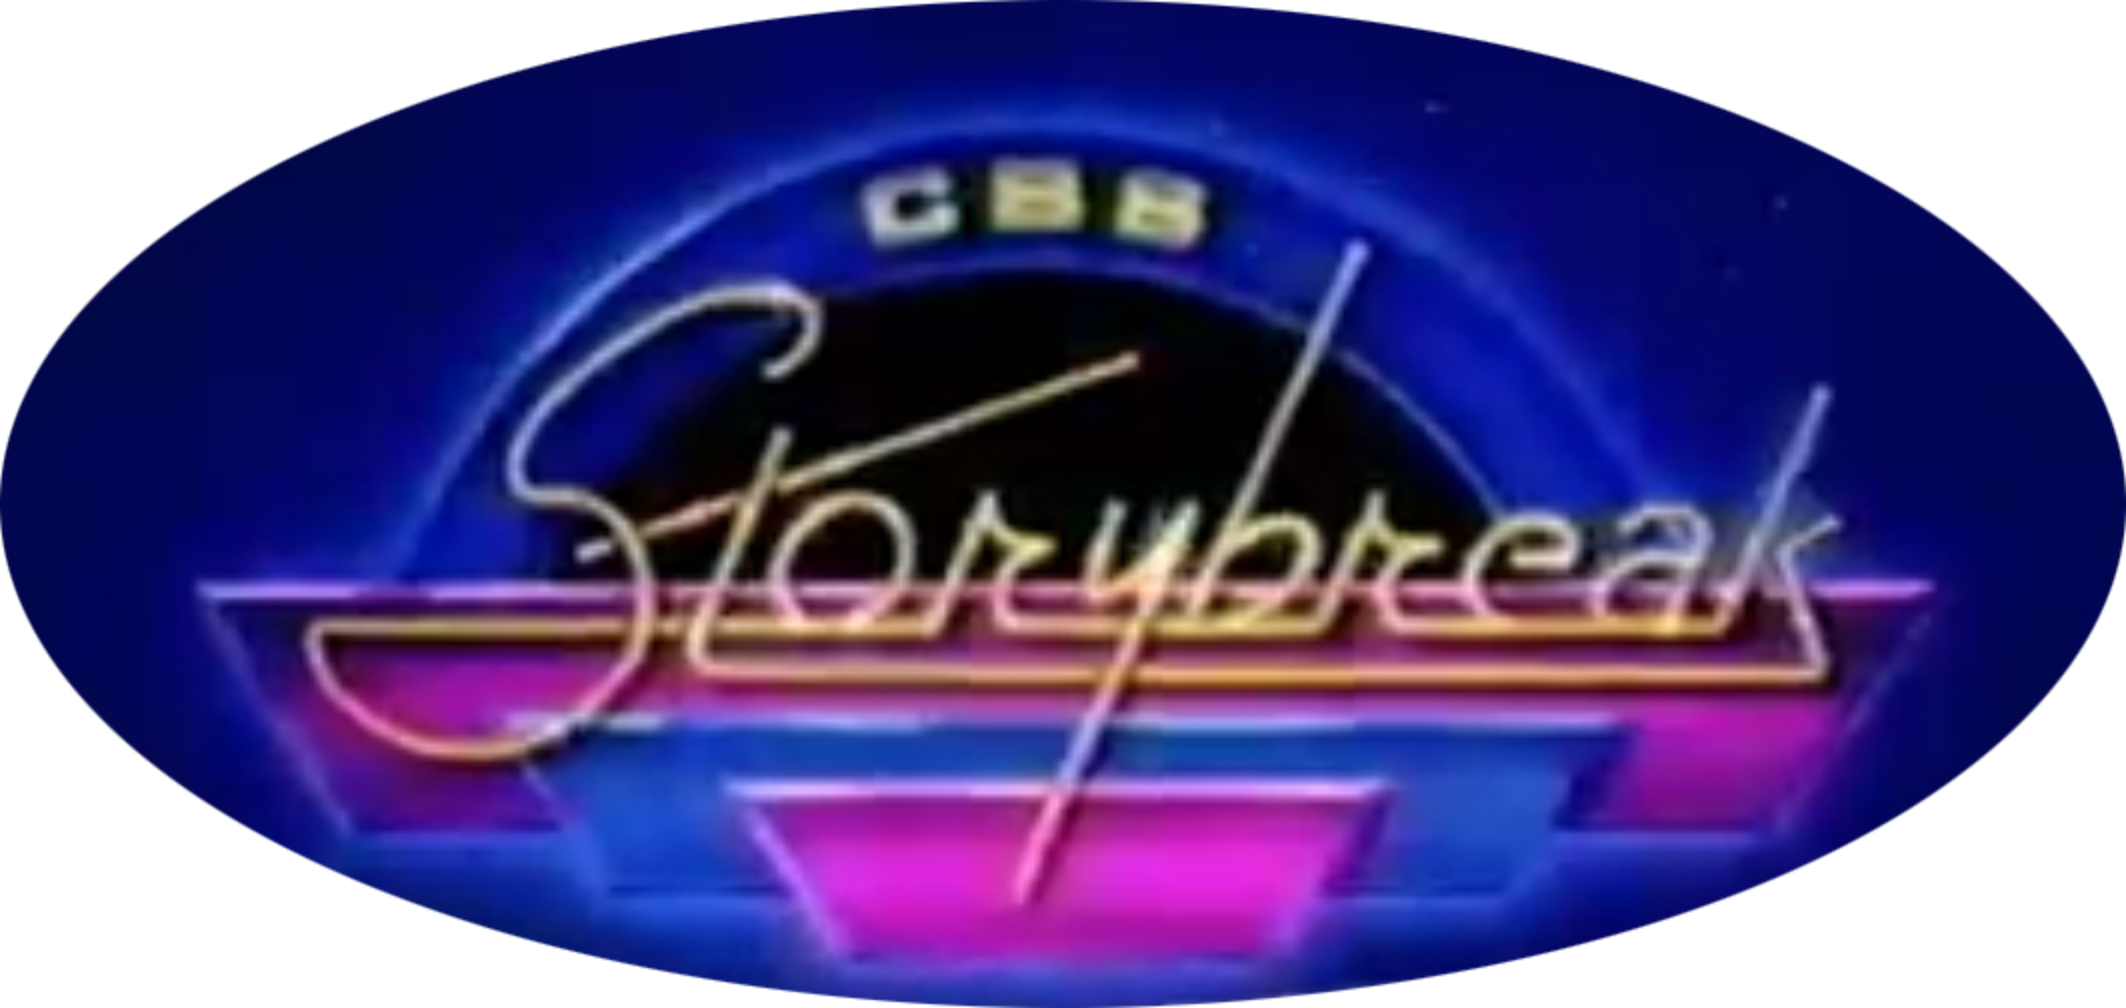 CBS Storybreak (3 DVD Box Set)